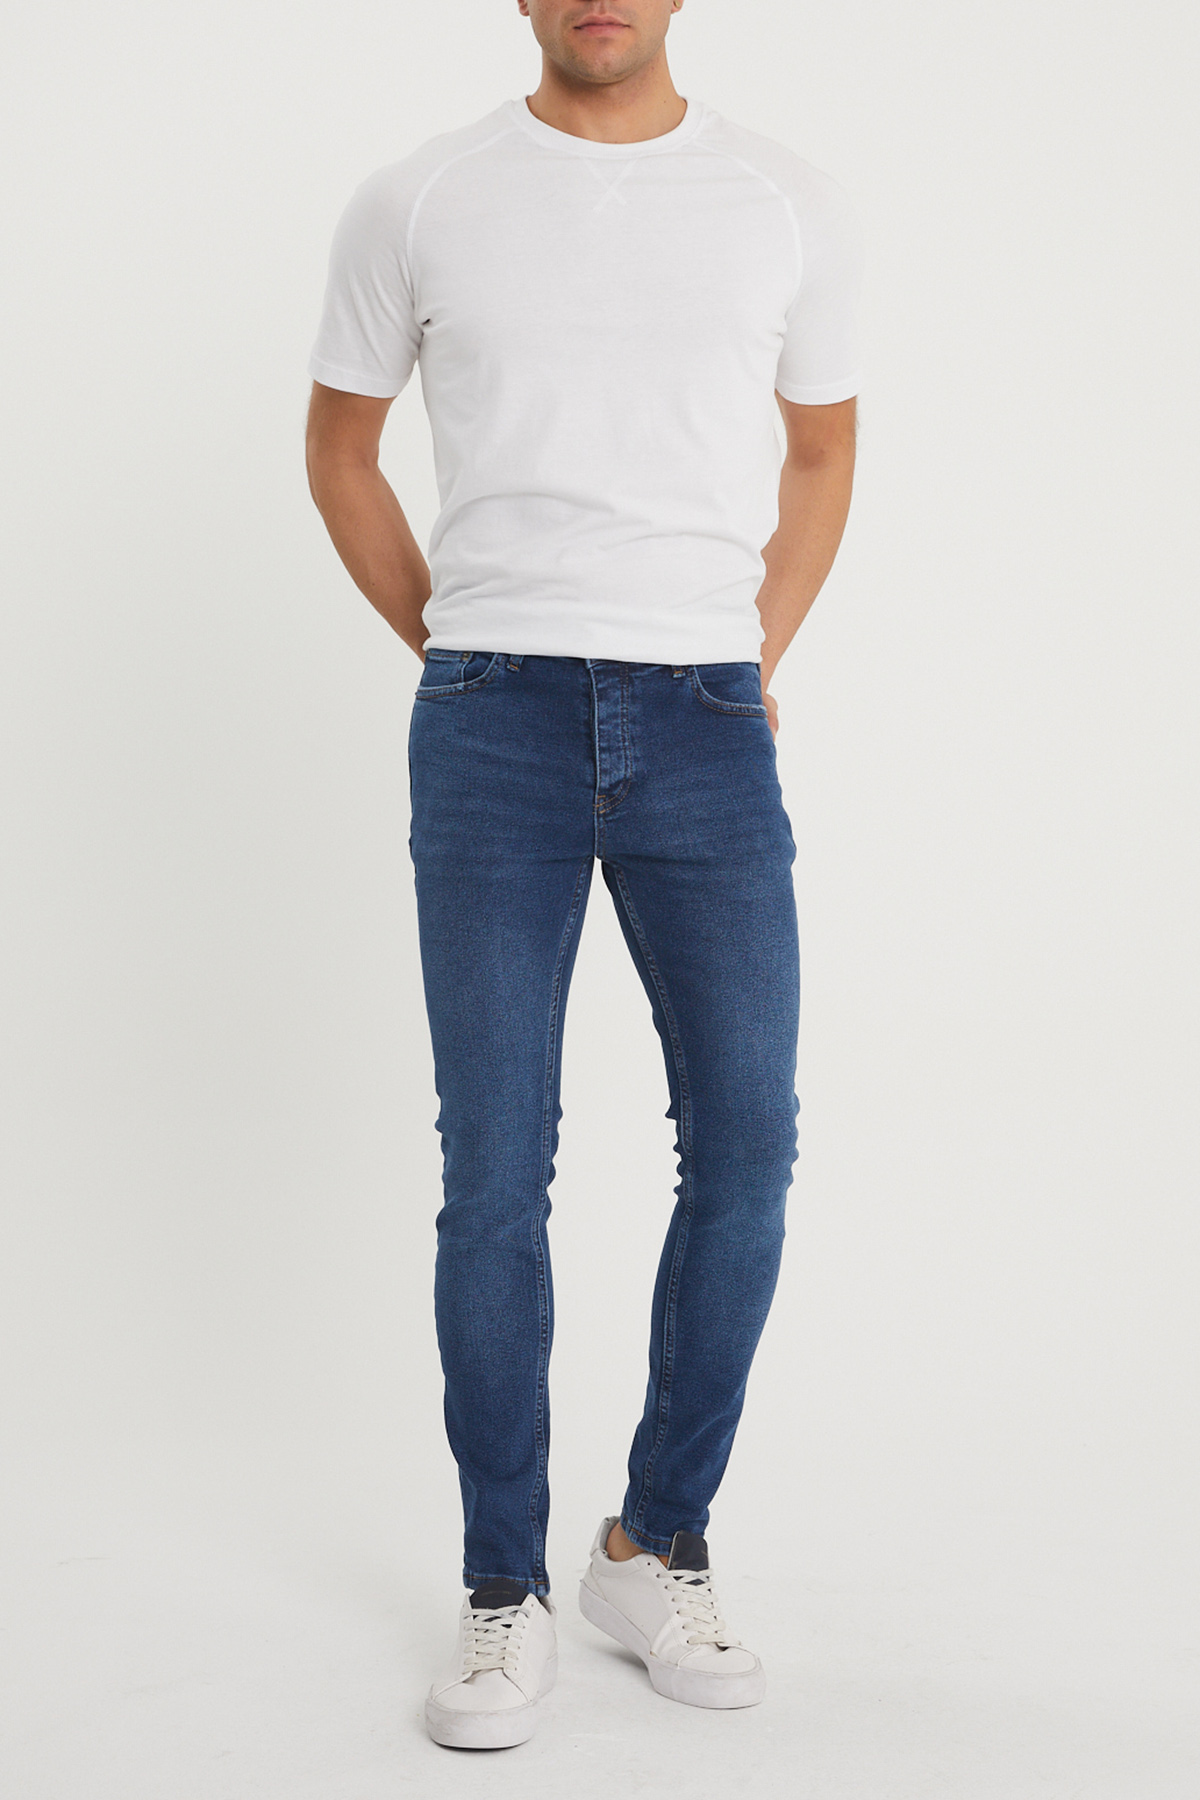 Lacivert Slim Fit Jean Pantolon 1KXE5-44351-14 - 4